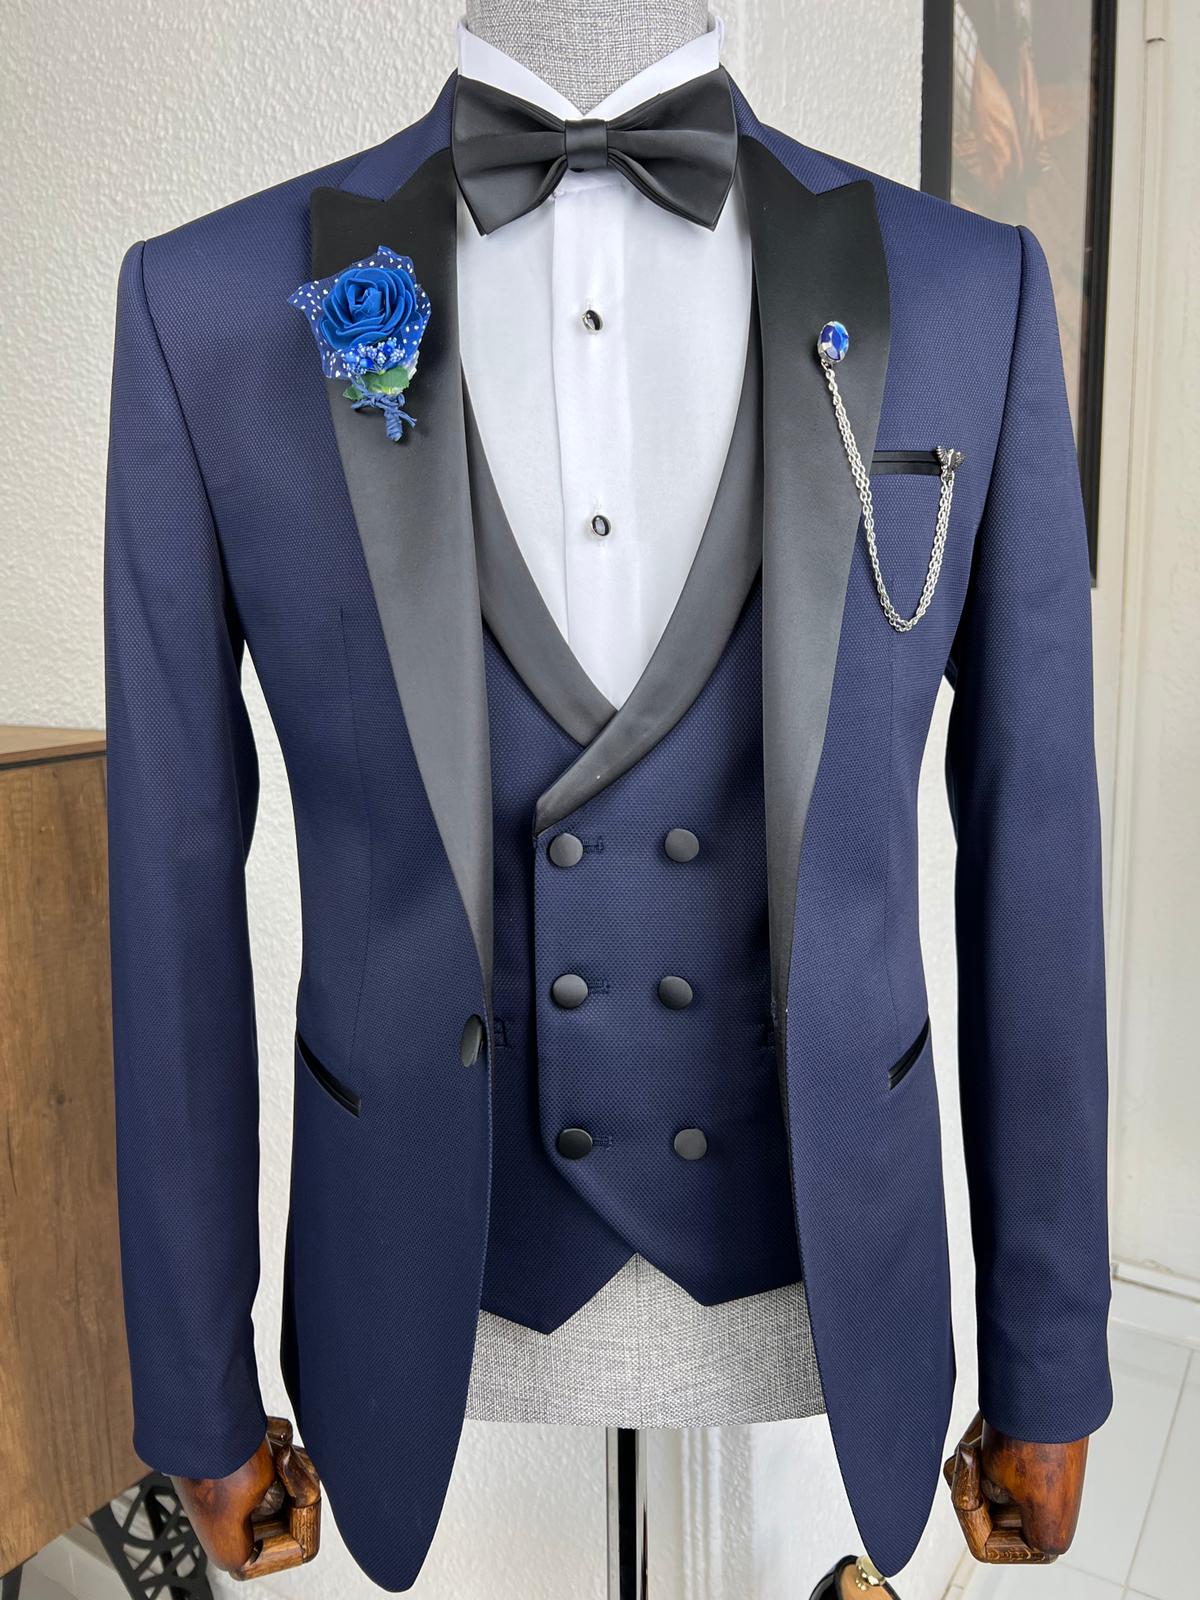 Bensen Slim Fit Patterned Navy Blue Dovetail Collared Tuxedo